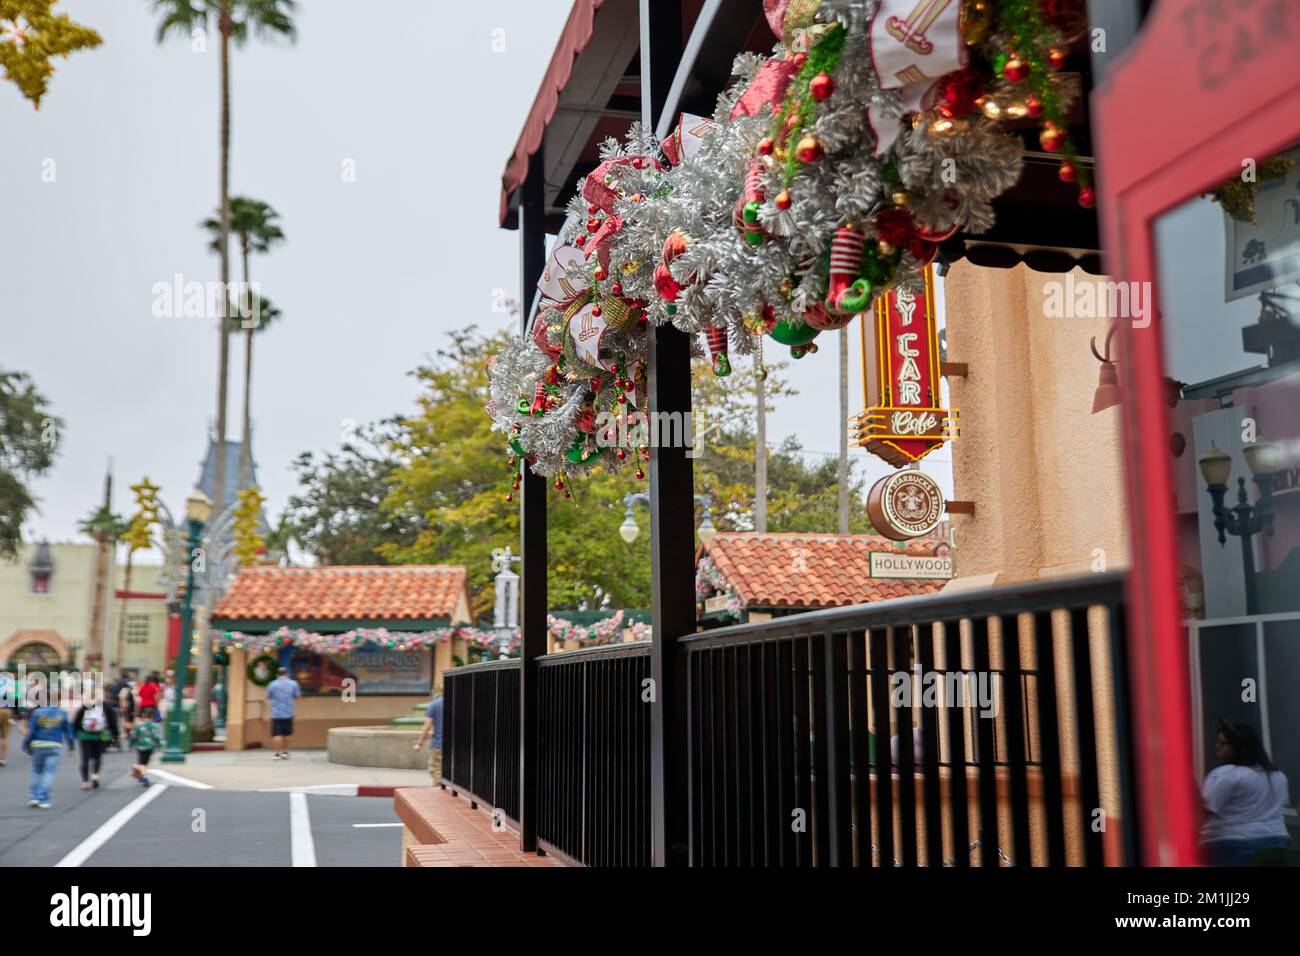 Dec 11, 2022. Orlando, FL, USA. Disney's Hollywood Studios walk in. Disney's Hollywood Studios is a theme park at the Walt Disney World Resort Stock Photo